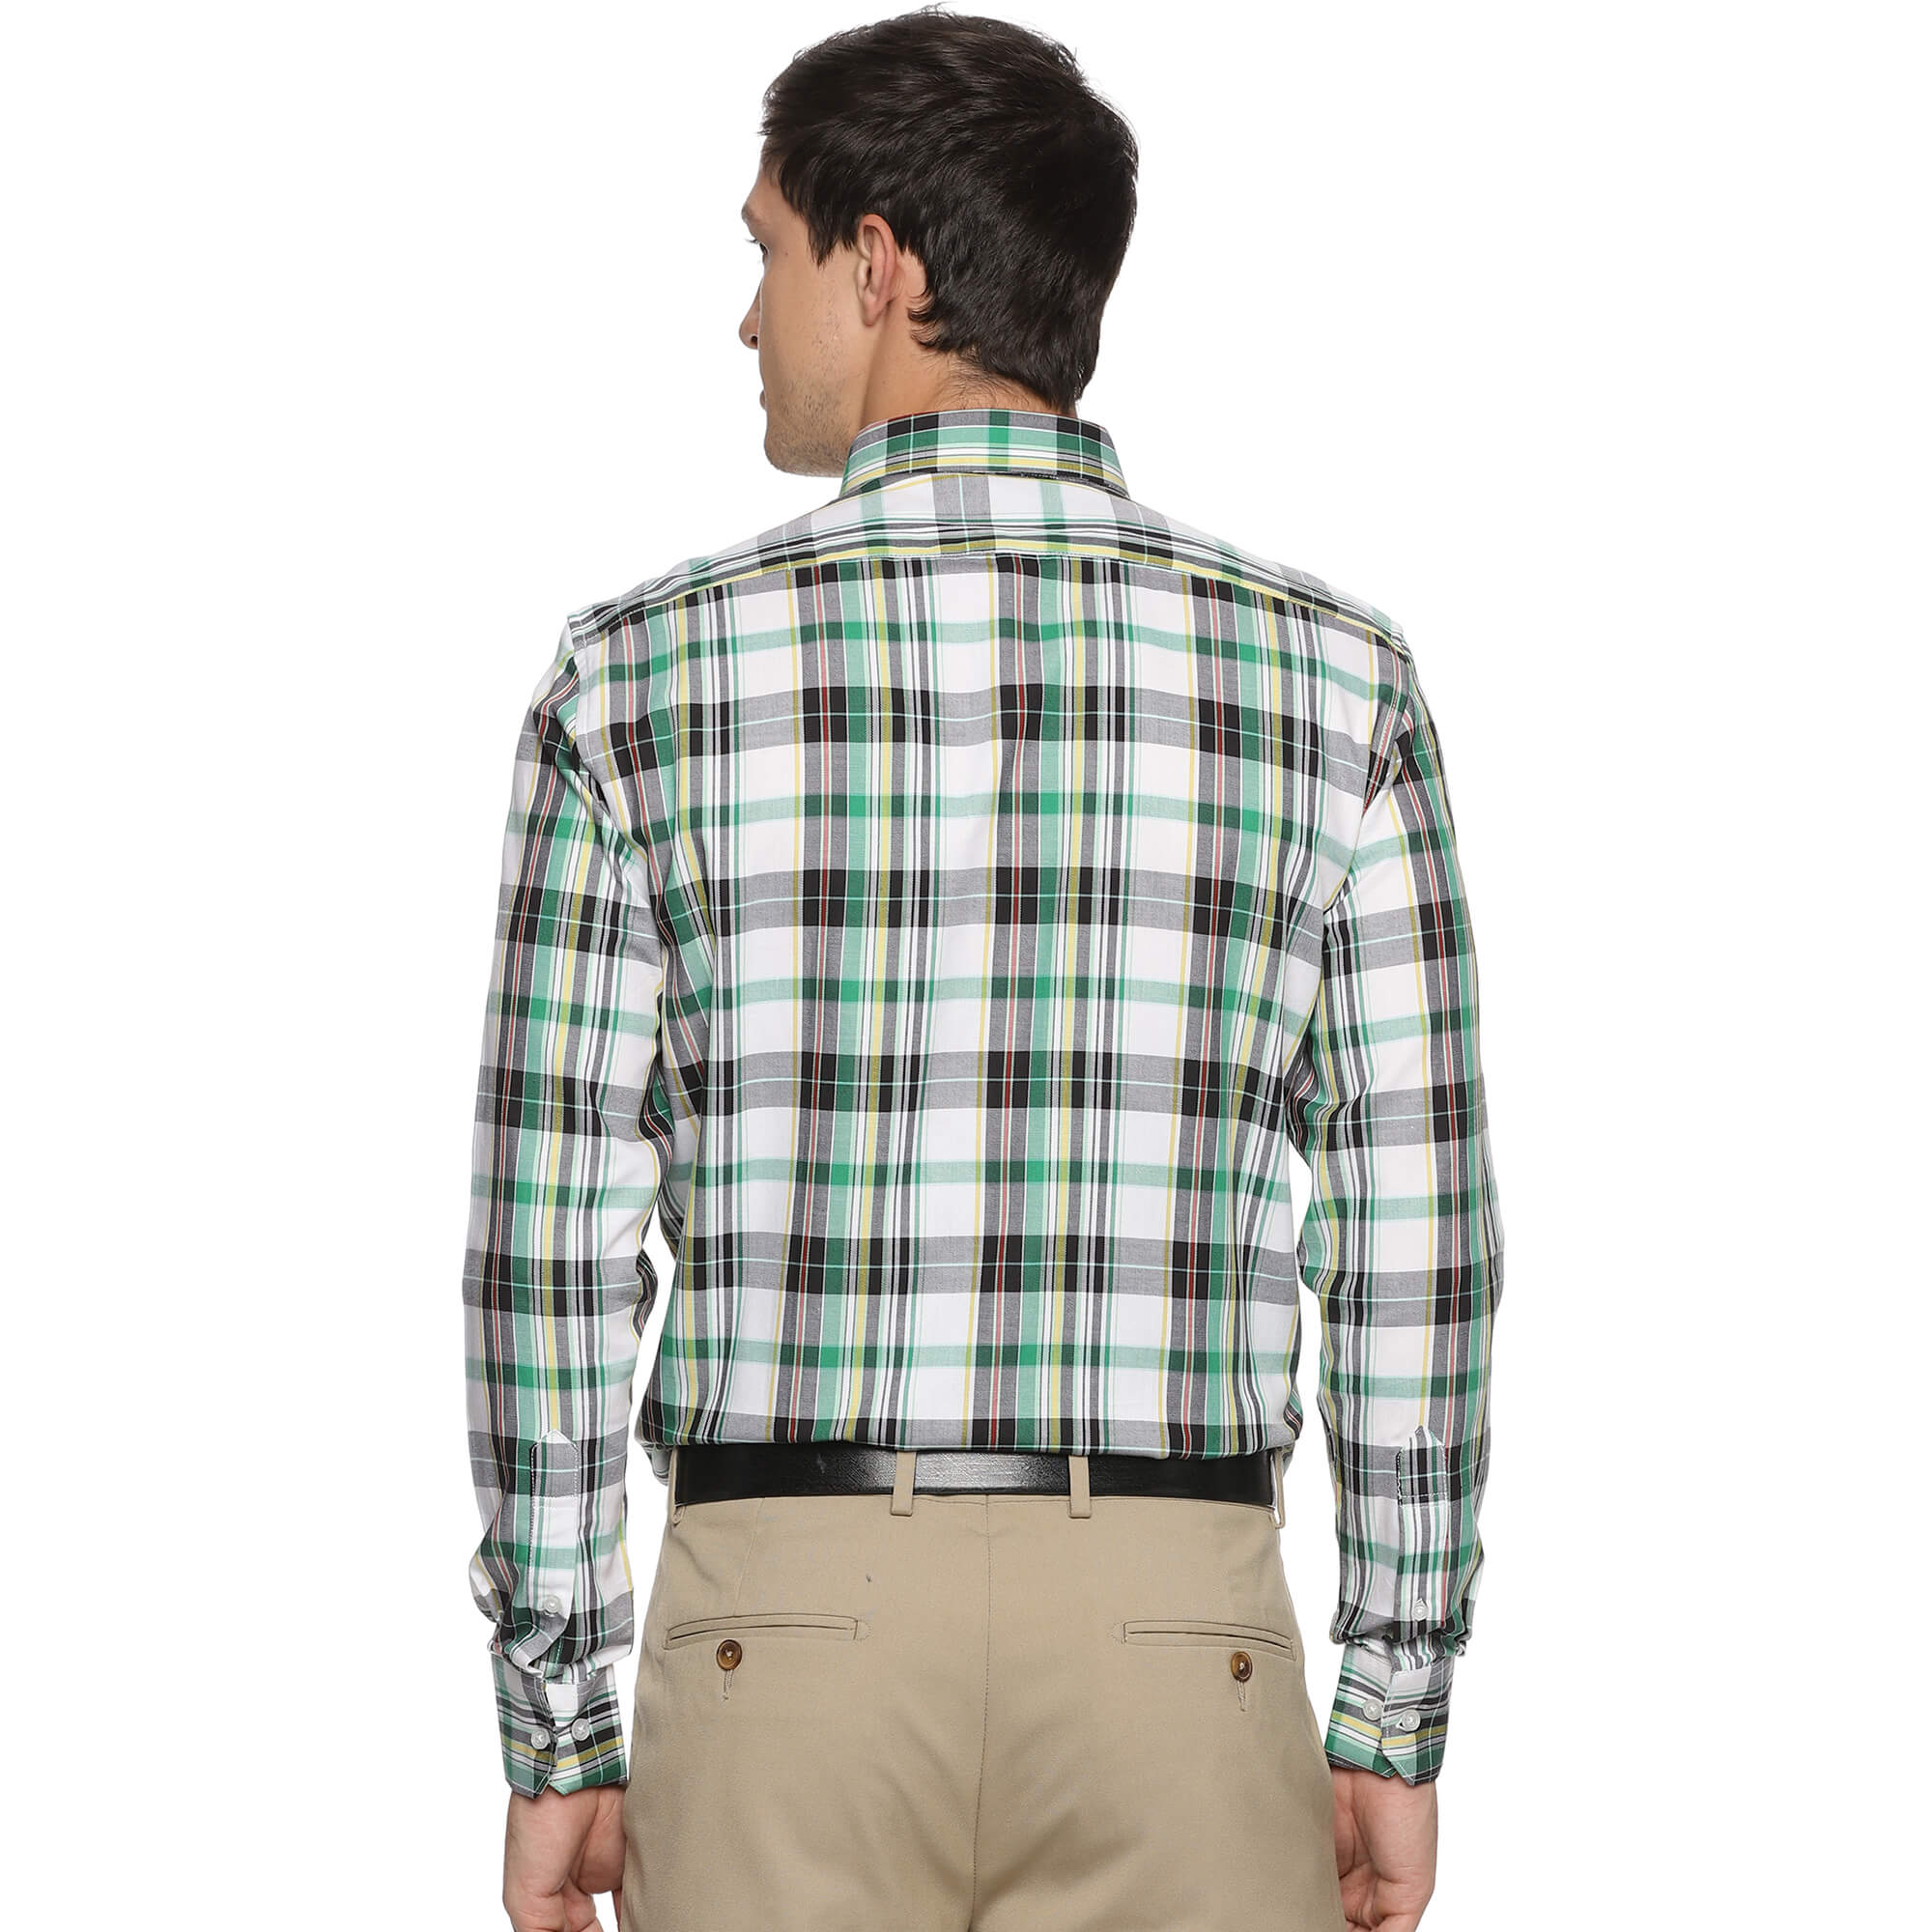 Maverick Cotton Check Shirt In Green & White - The Formal Club